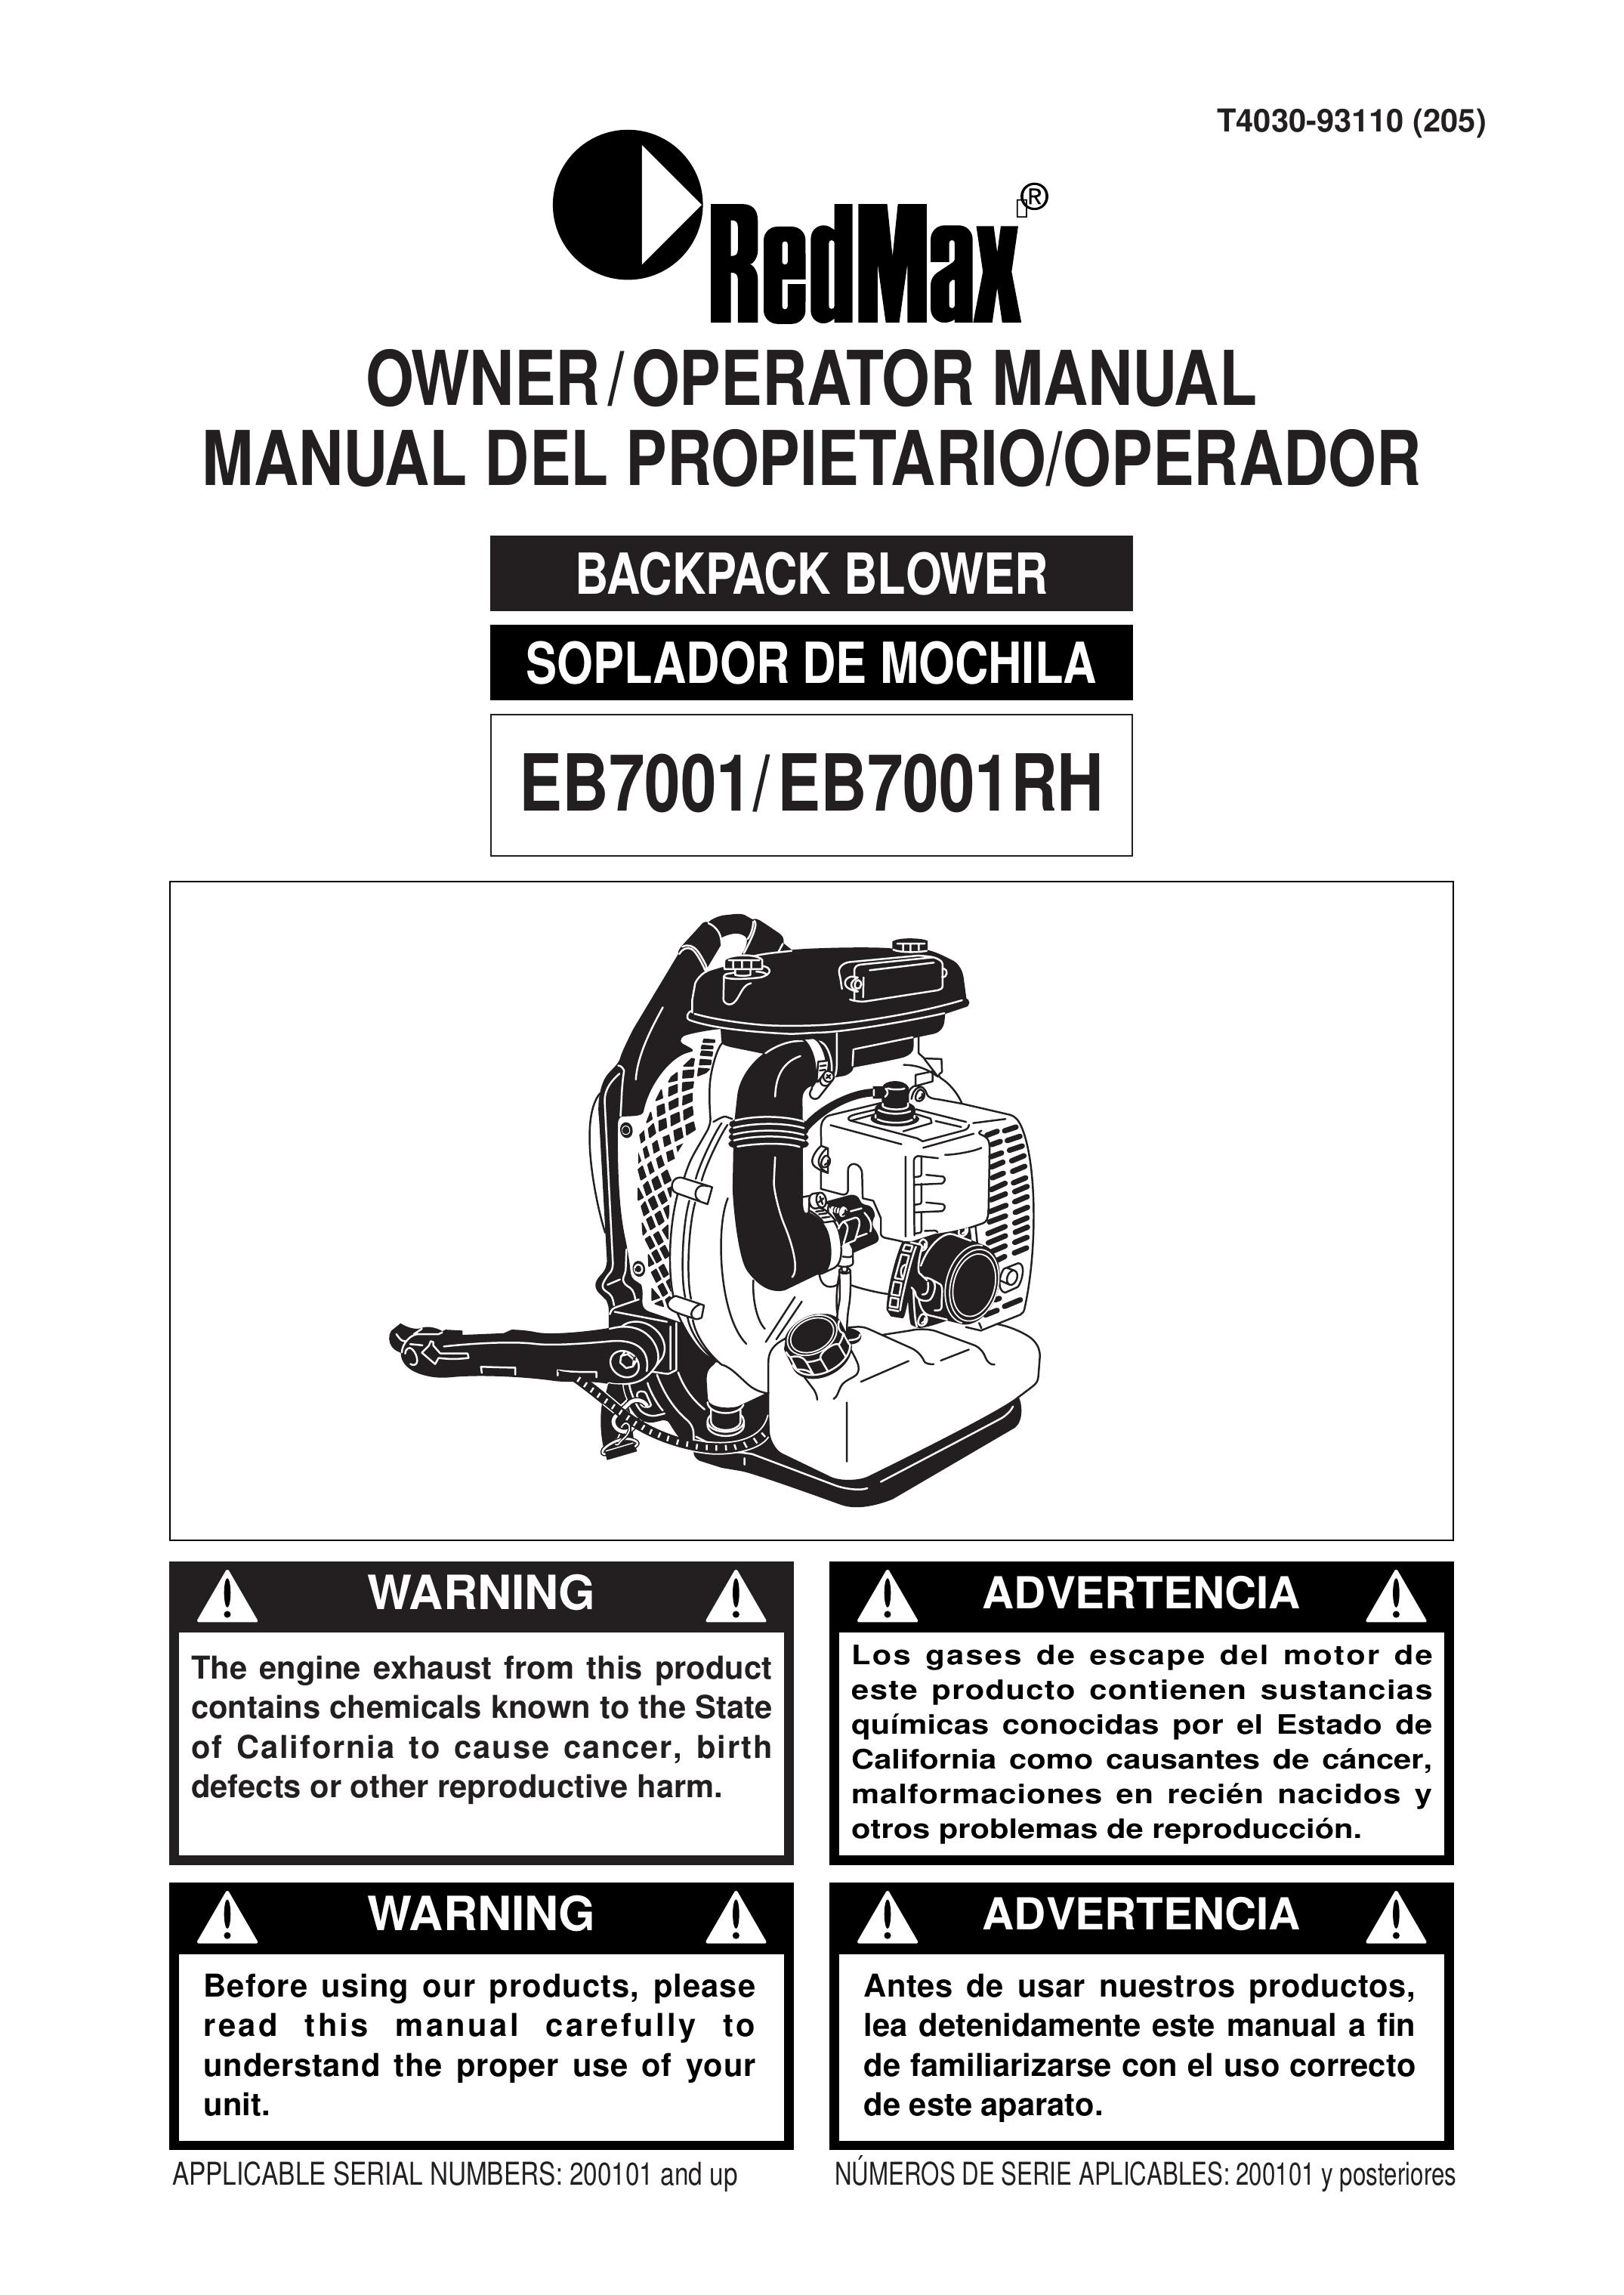 RedMax EB7001 Blower User Manual